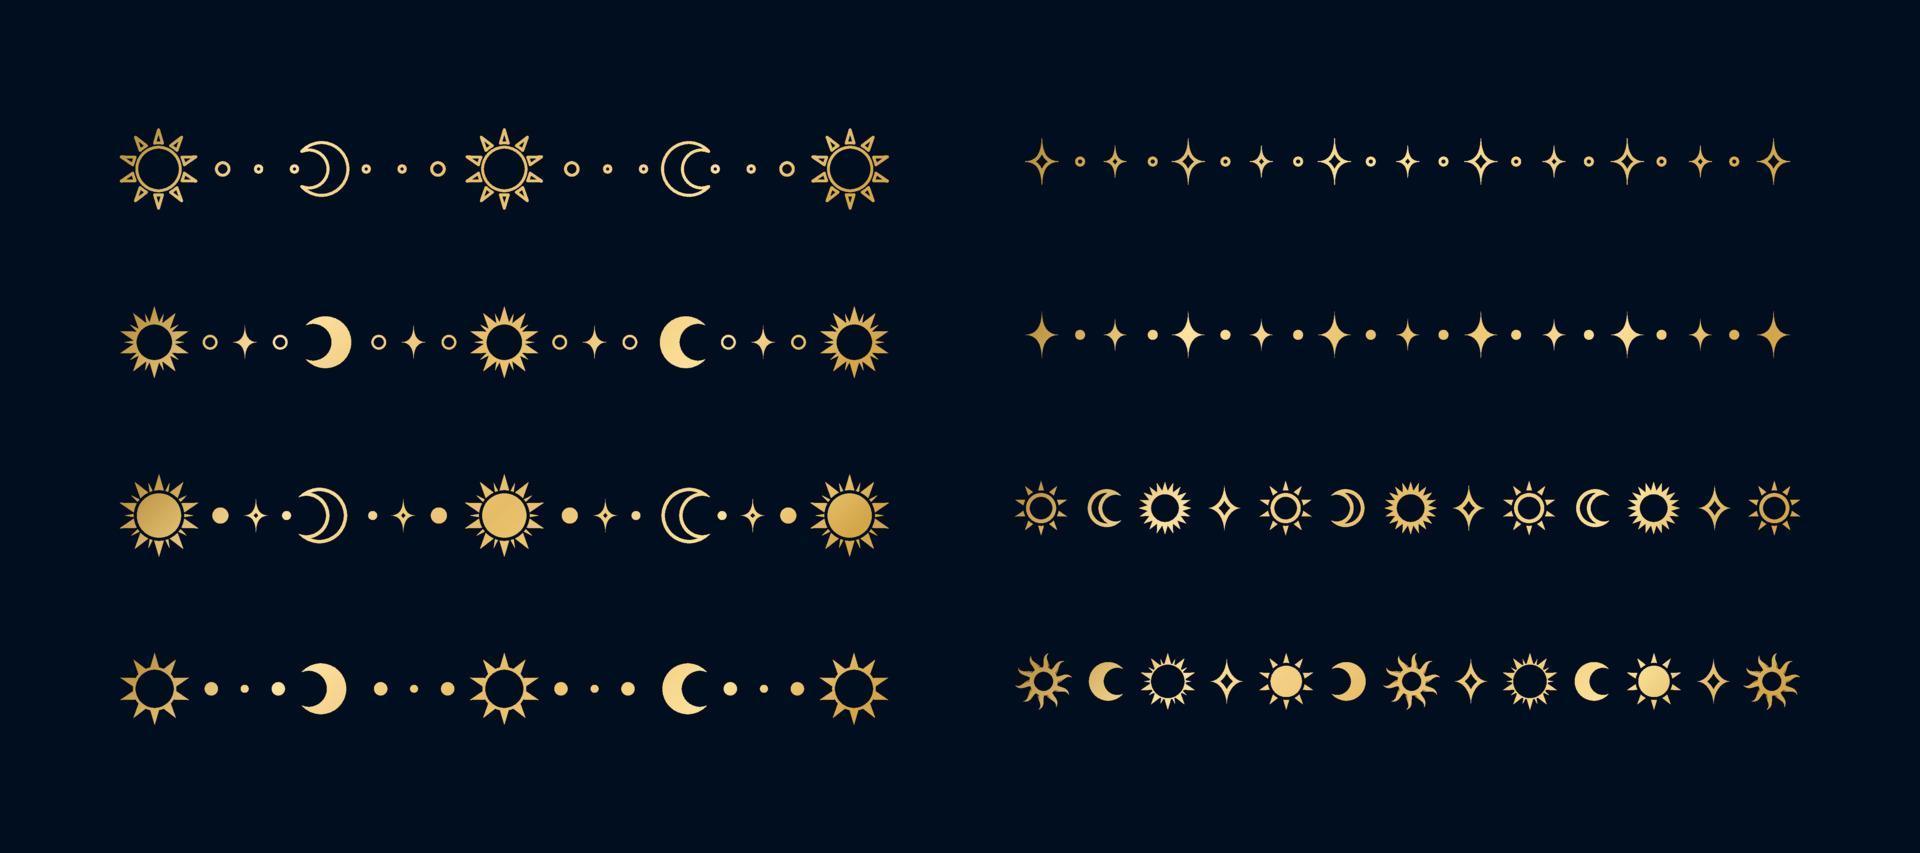 oro celestial separador conjunto con sol, estrellas, Luna etapas, medias lunas florido boho místico divisor decorativo elemento vector